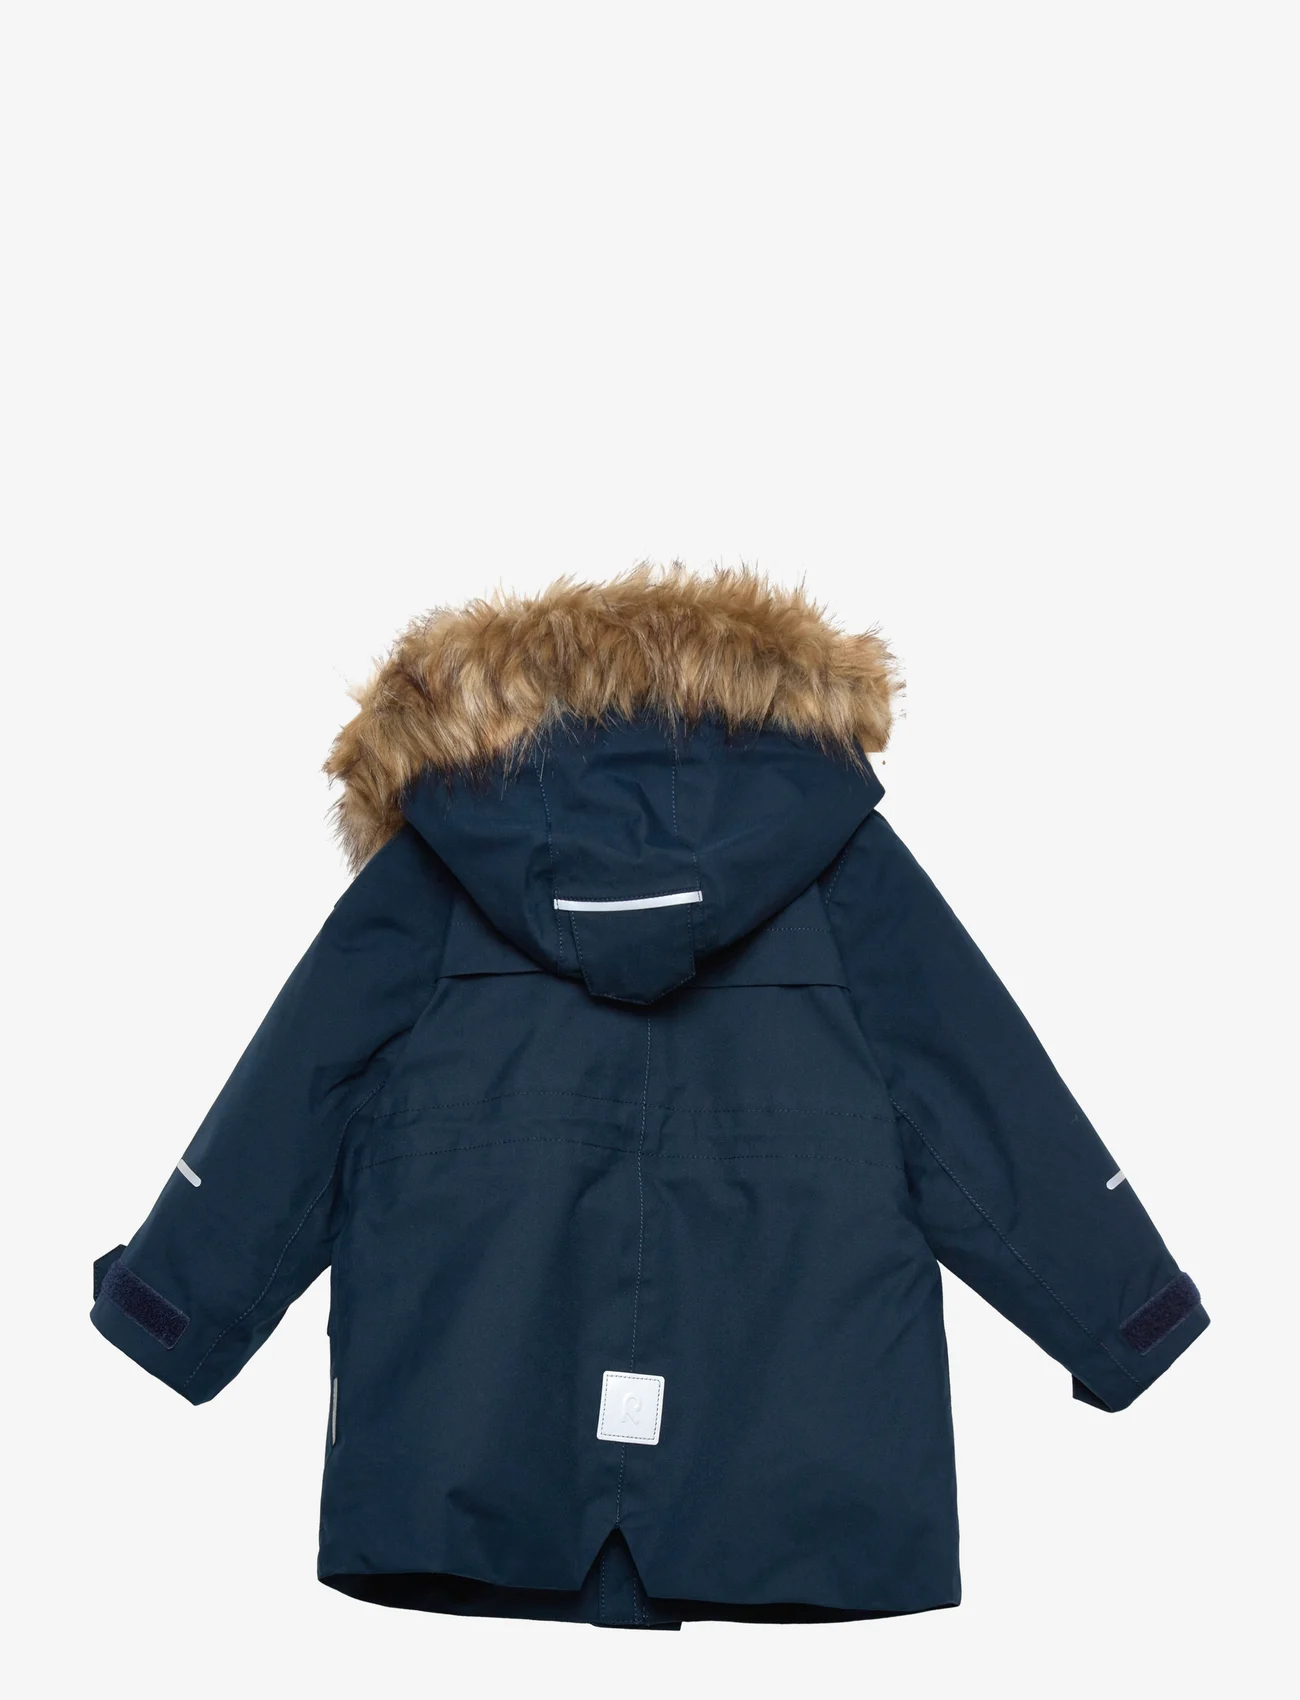 Reima - Reimatec winter jacket, Mutka - parkad - navy - 1